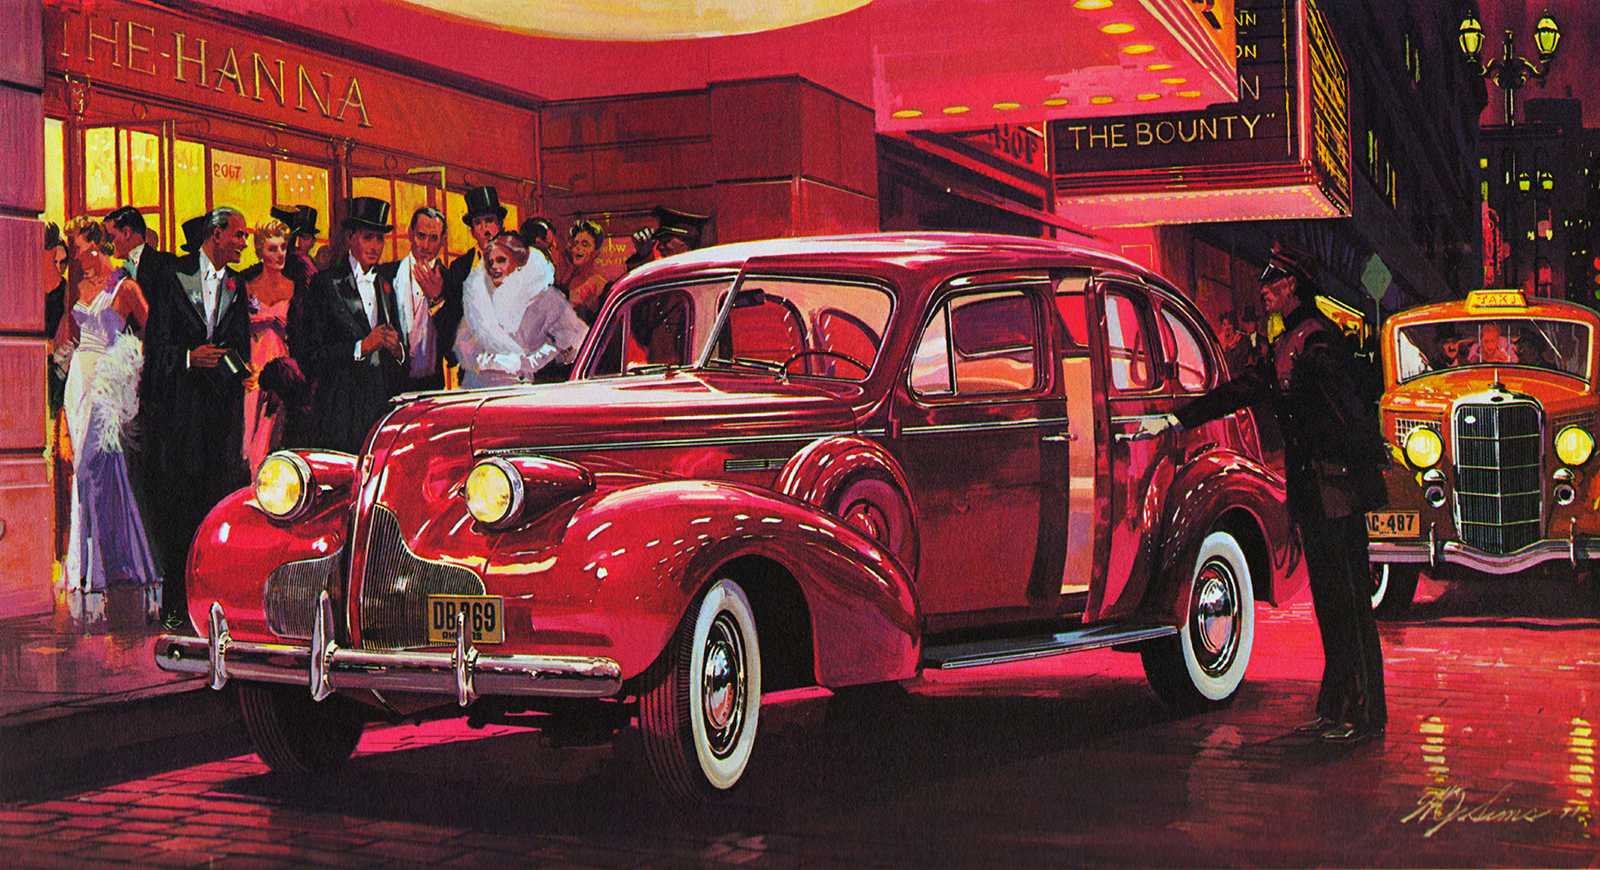 1939 Buick Roadmaster Sedan: Illustrated by William J. Sims